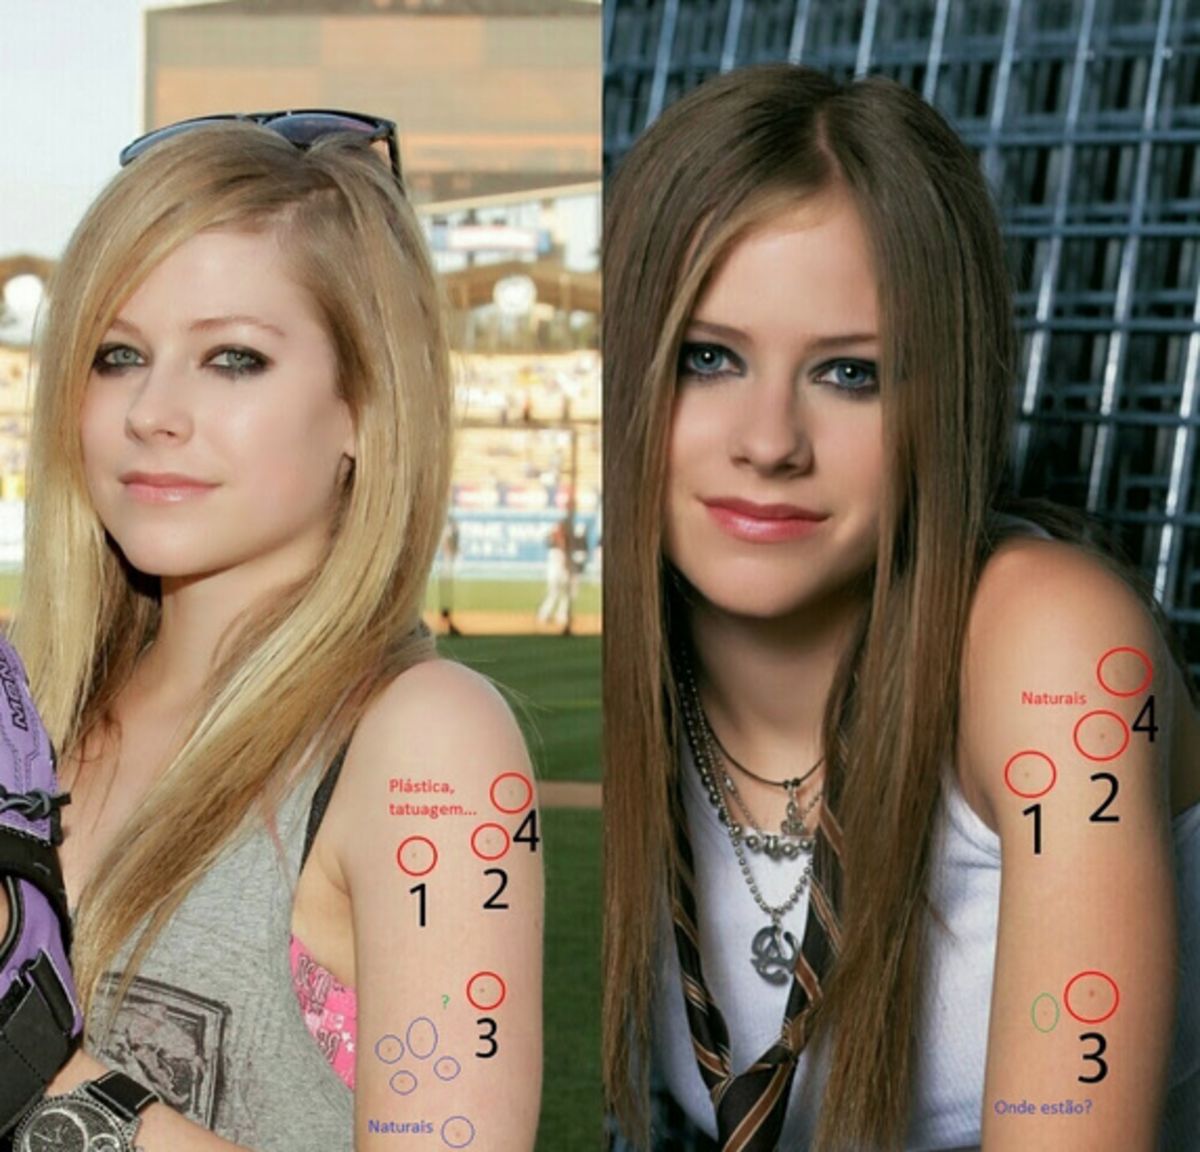 7 Celebrities Conspiracies Avril Lavigne's Sheds Light On